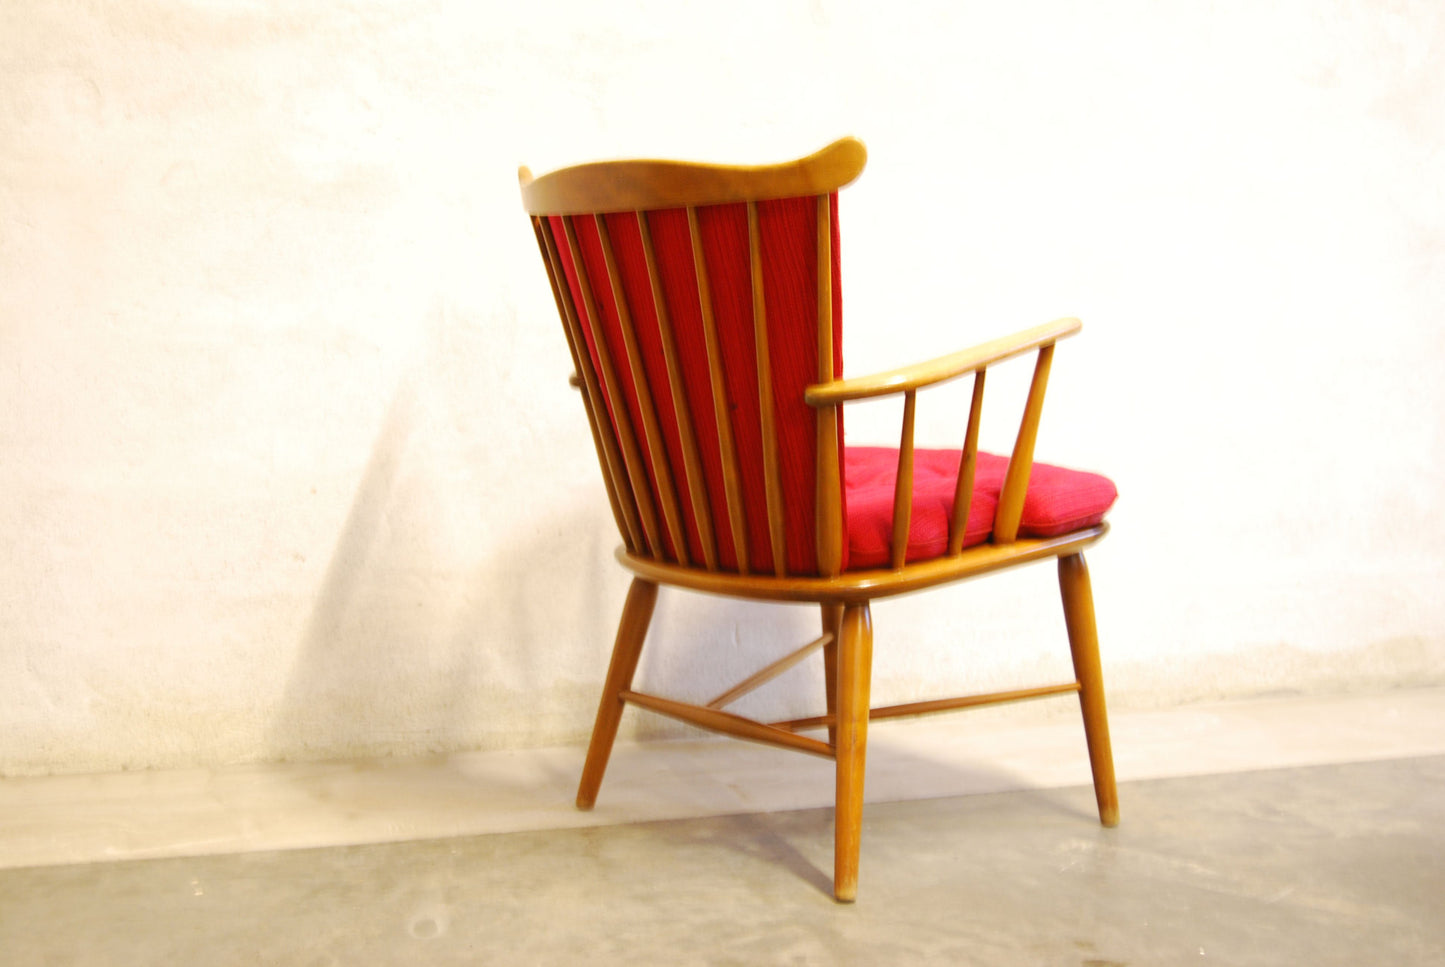 Occasional chair by Bíëí_rge Mogensen